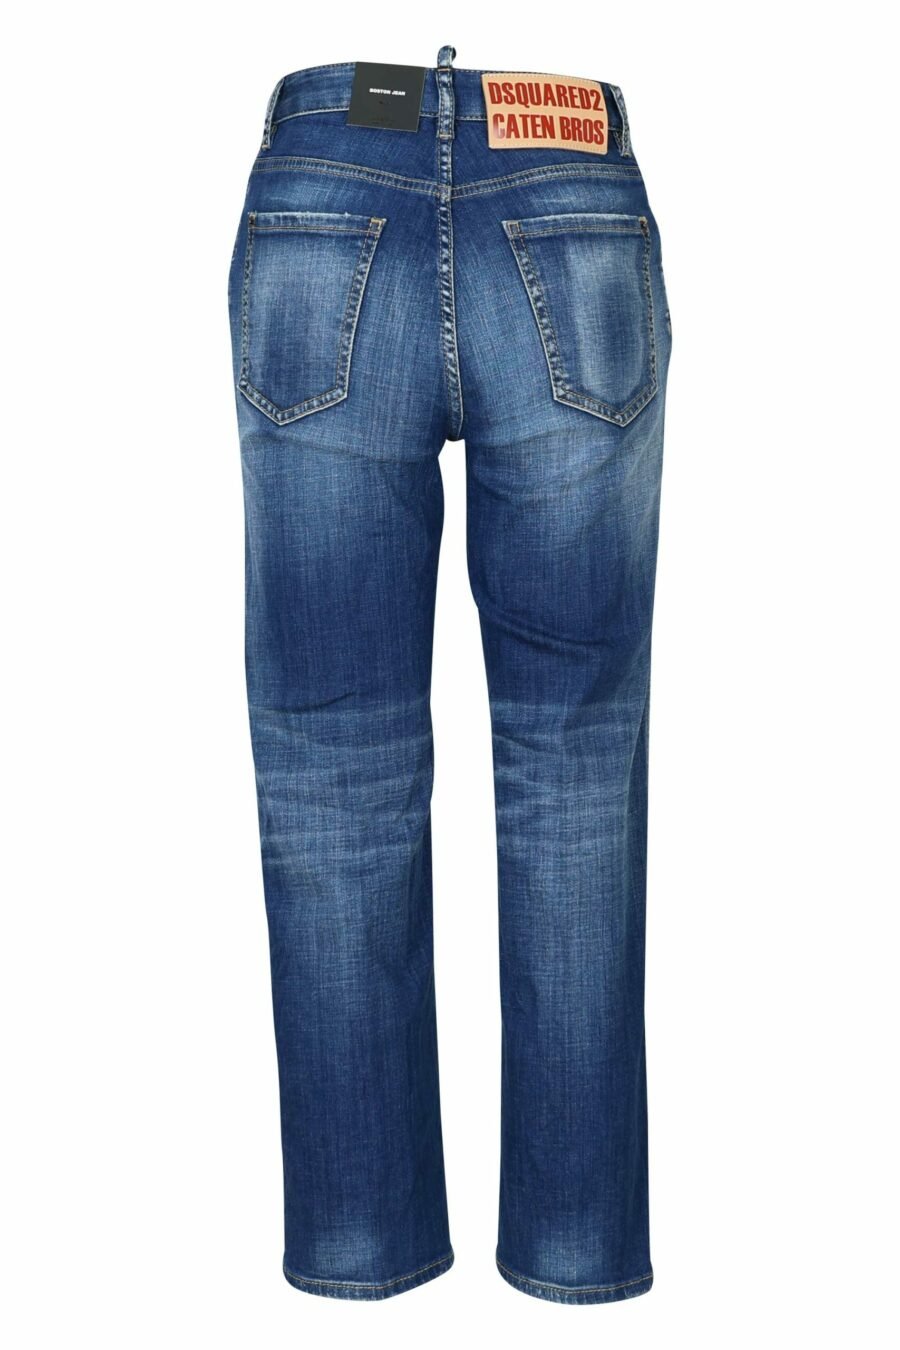 Blue "boston jean" worn trousers - 8054148460044 2 scaled